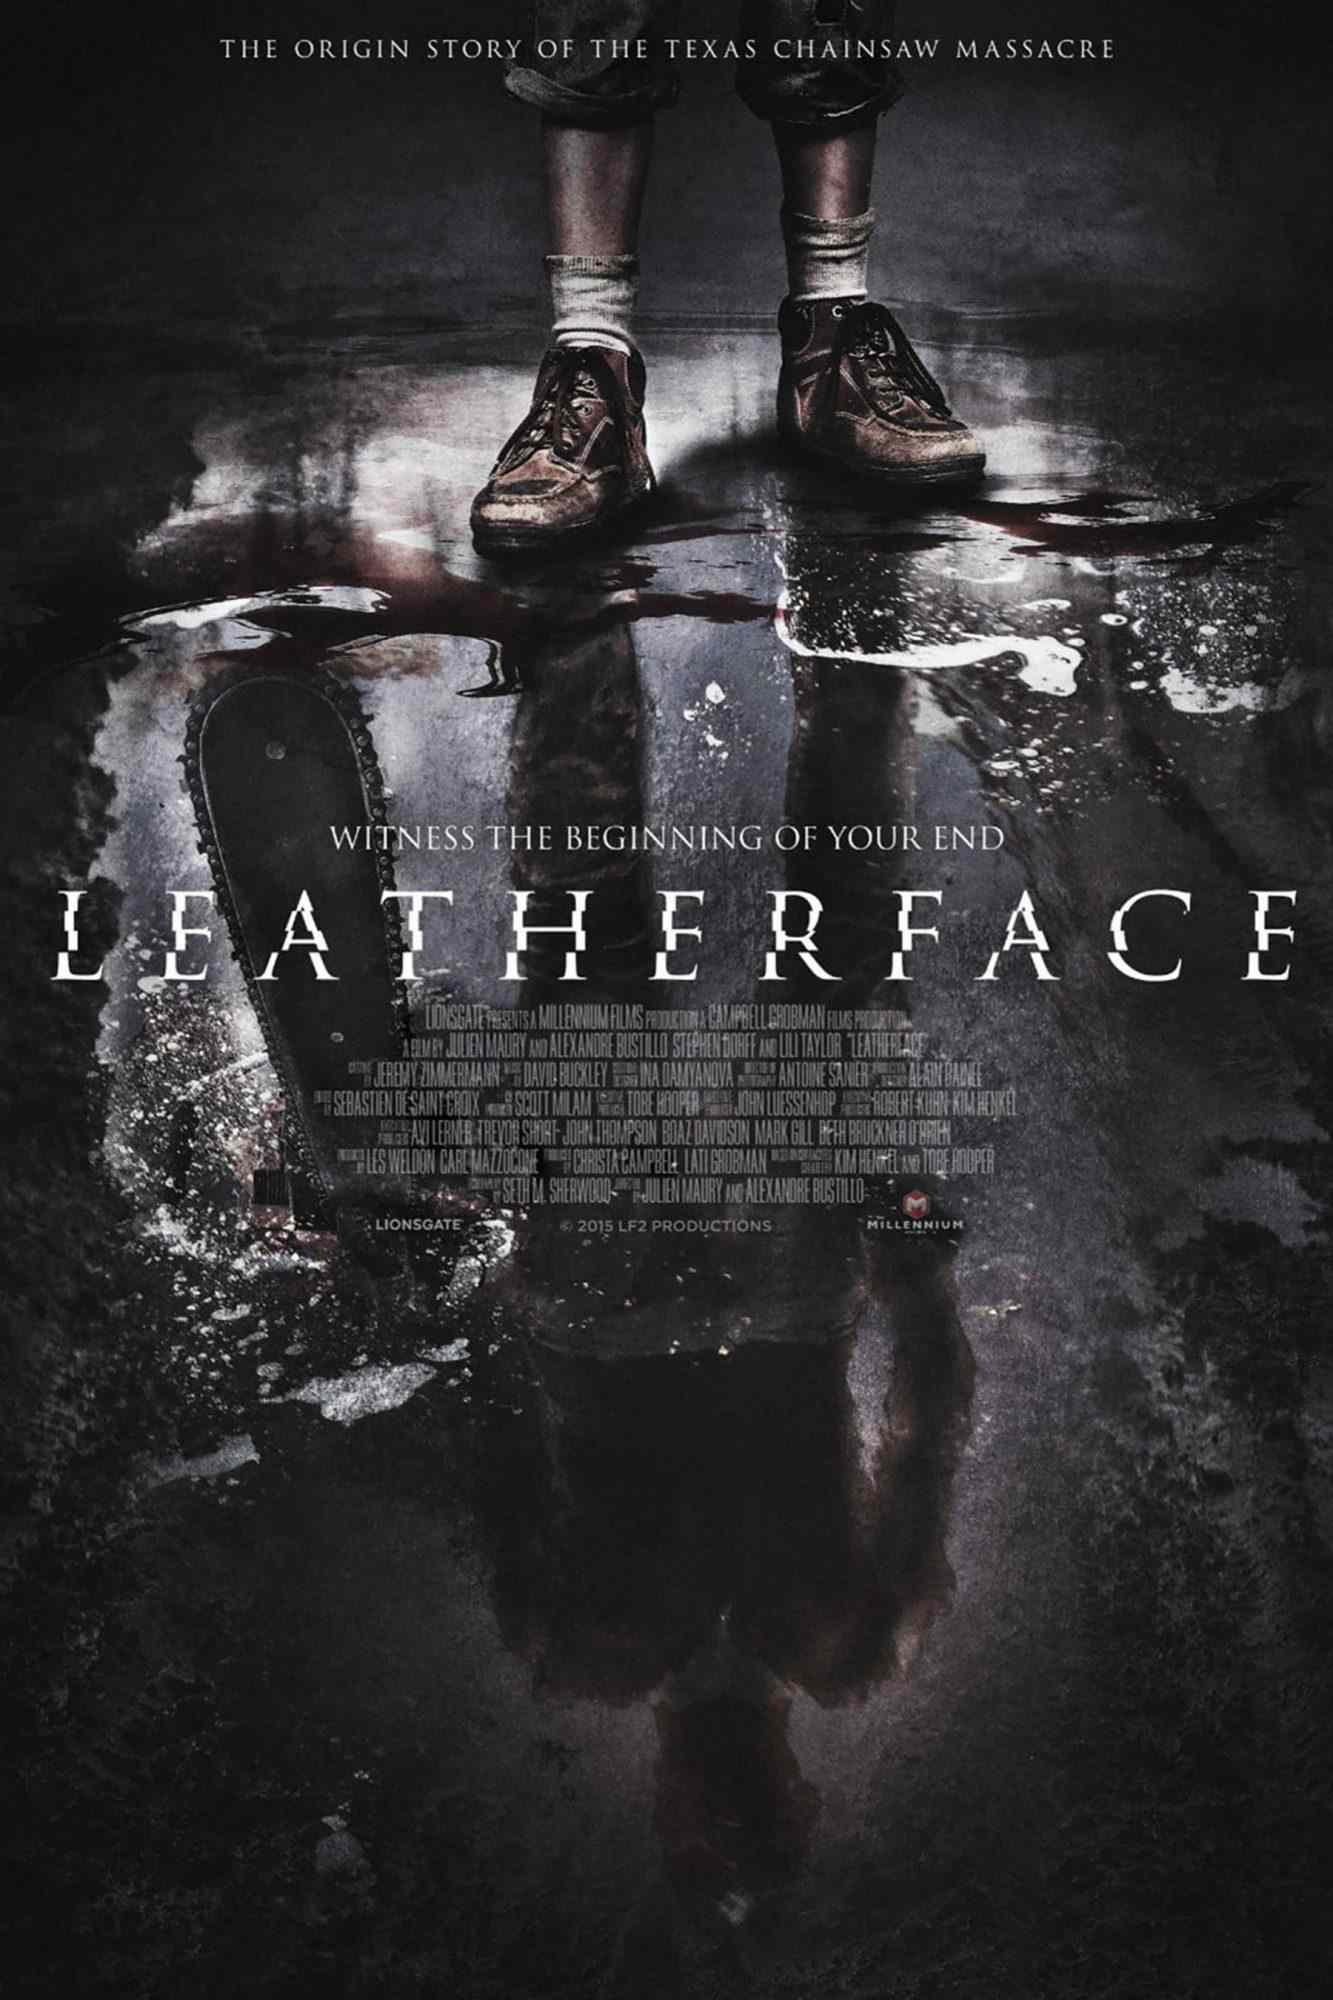 leatherface (2017 film)